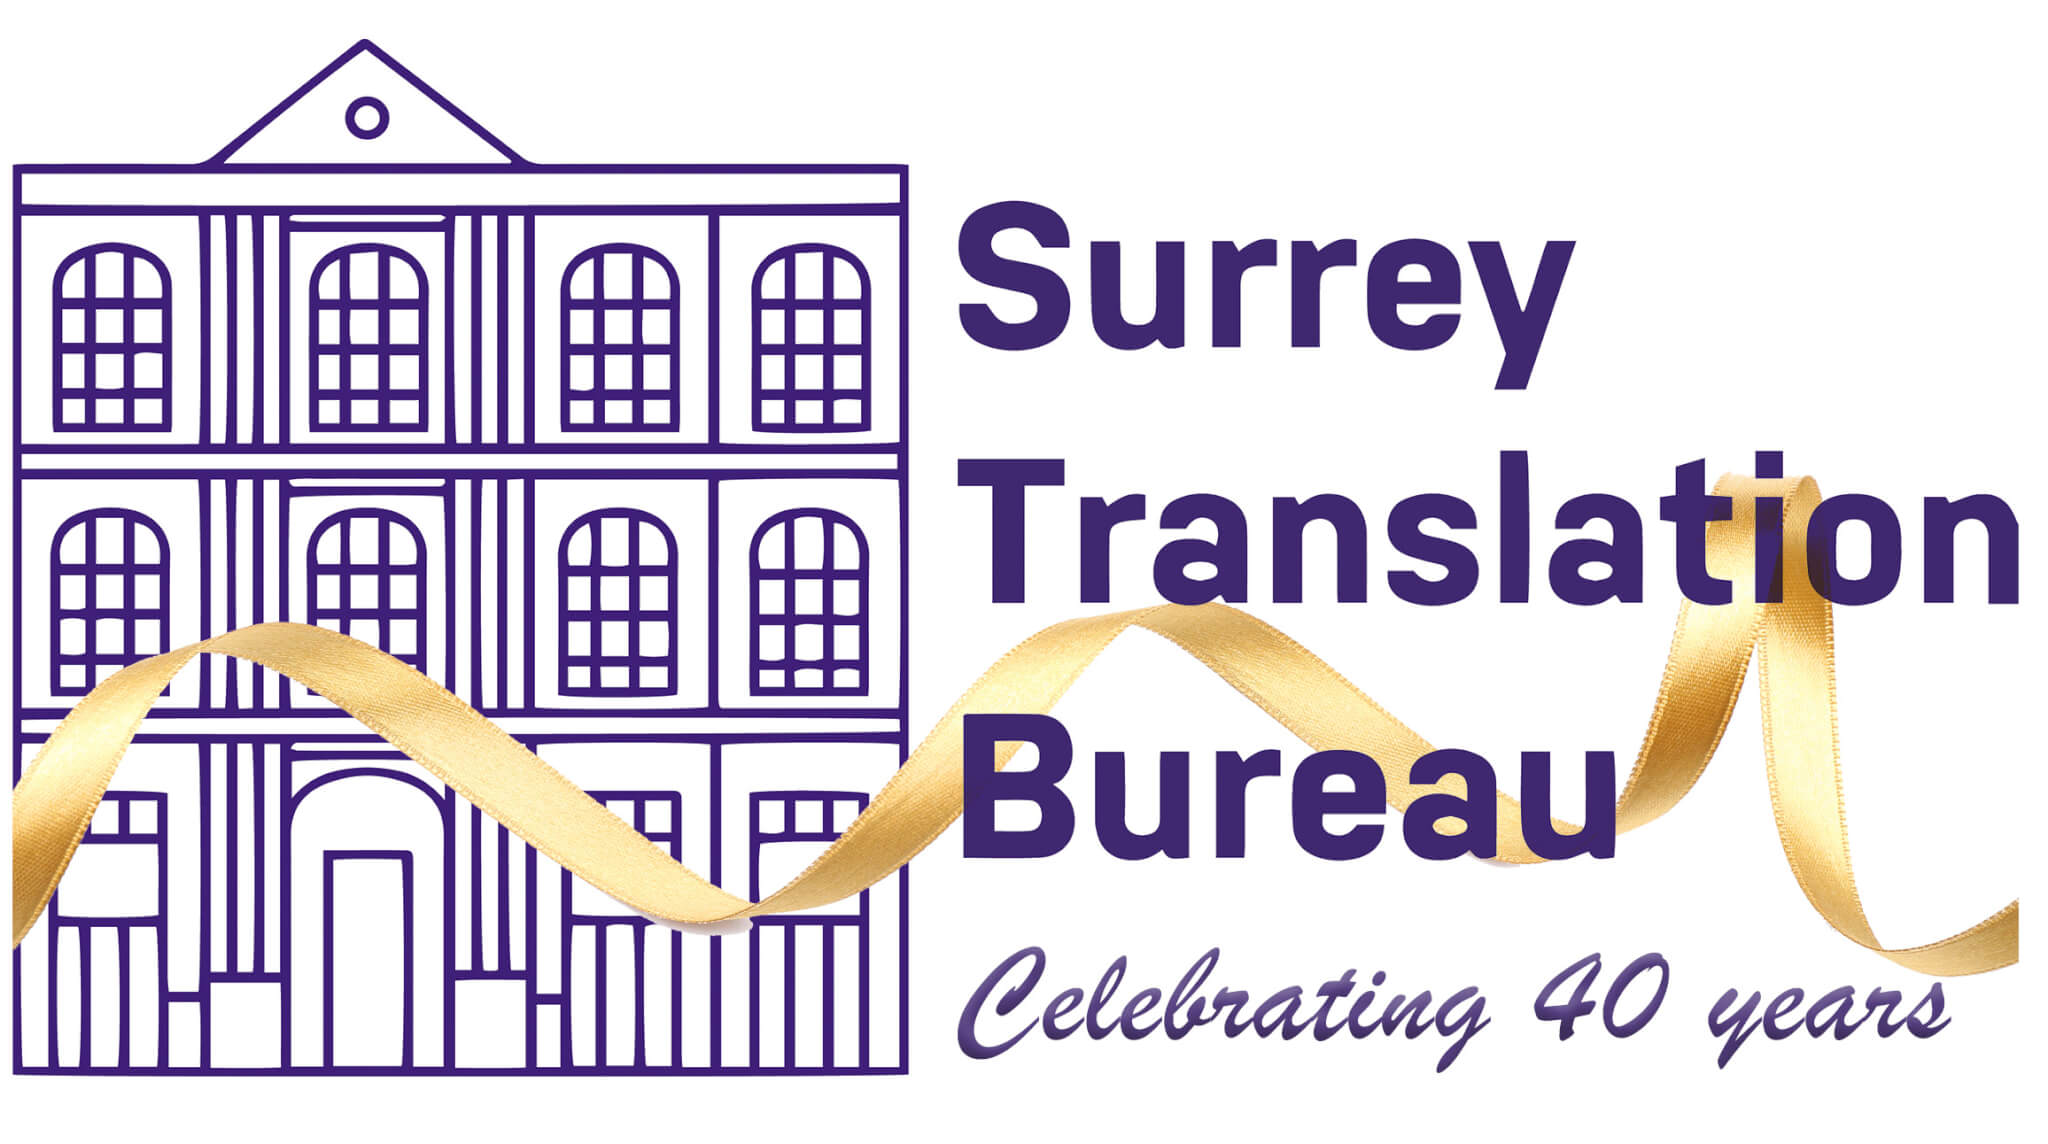 40 years of Surrey Translation Bureau